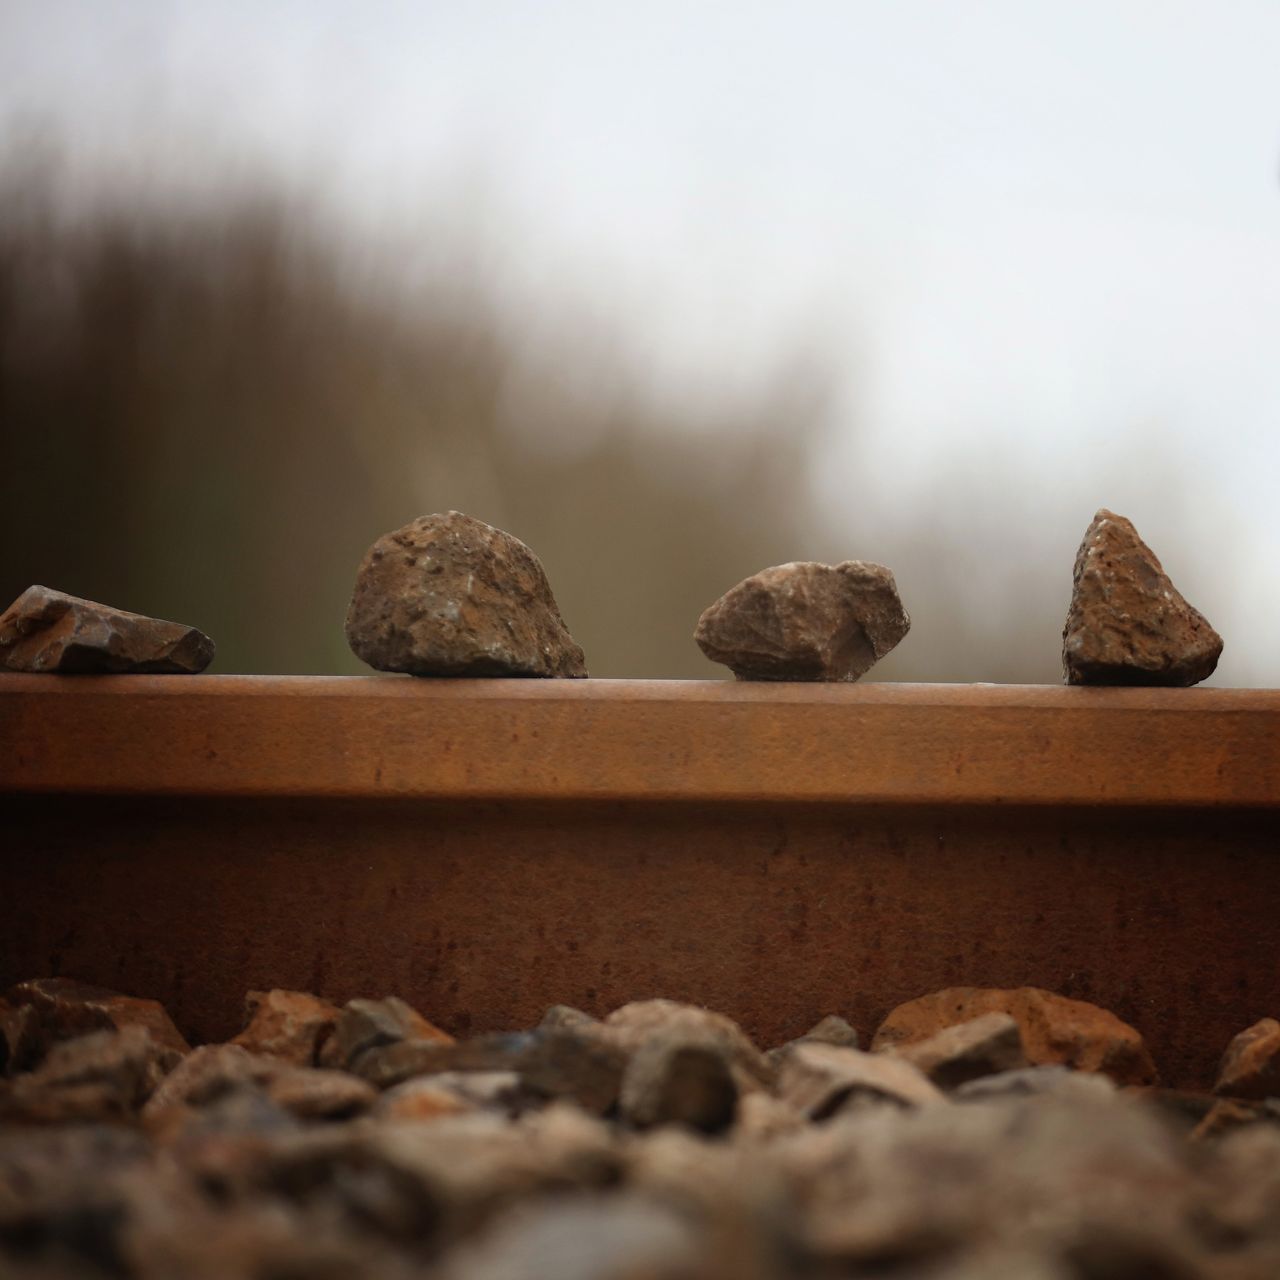 Rocks left behind on a railway track.